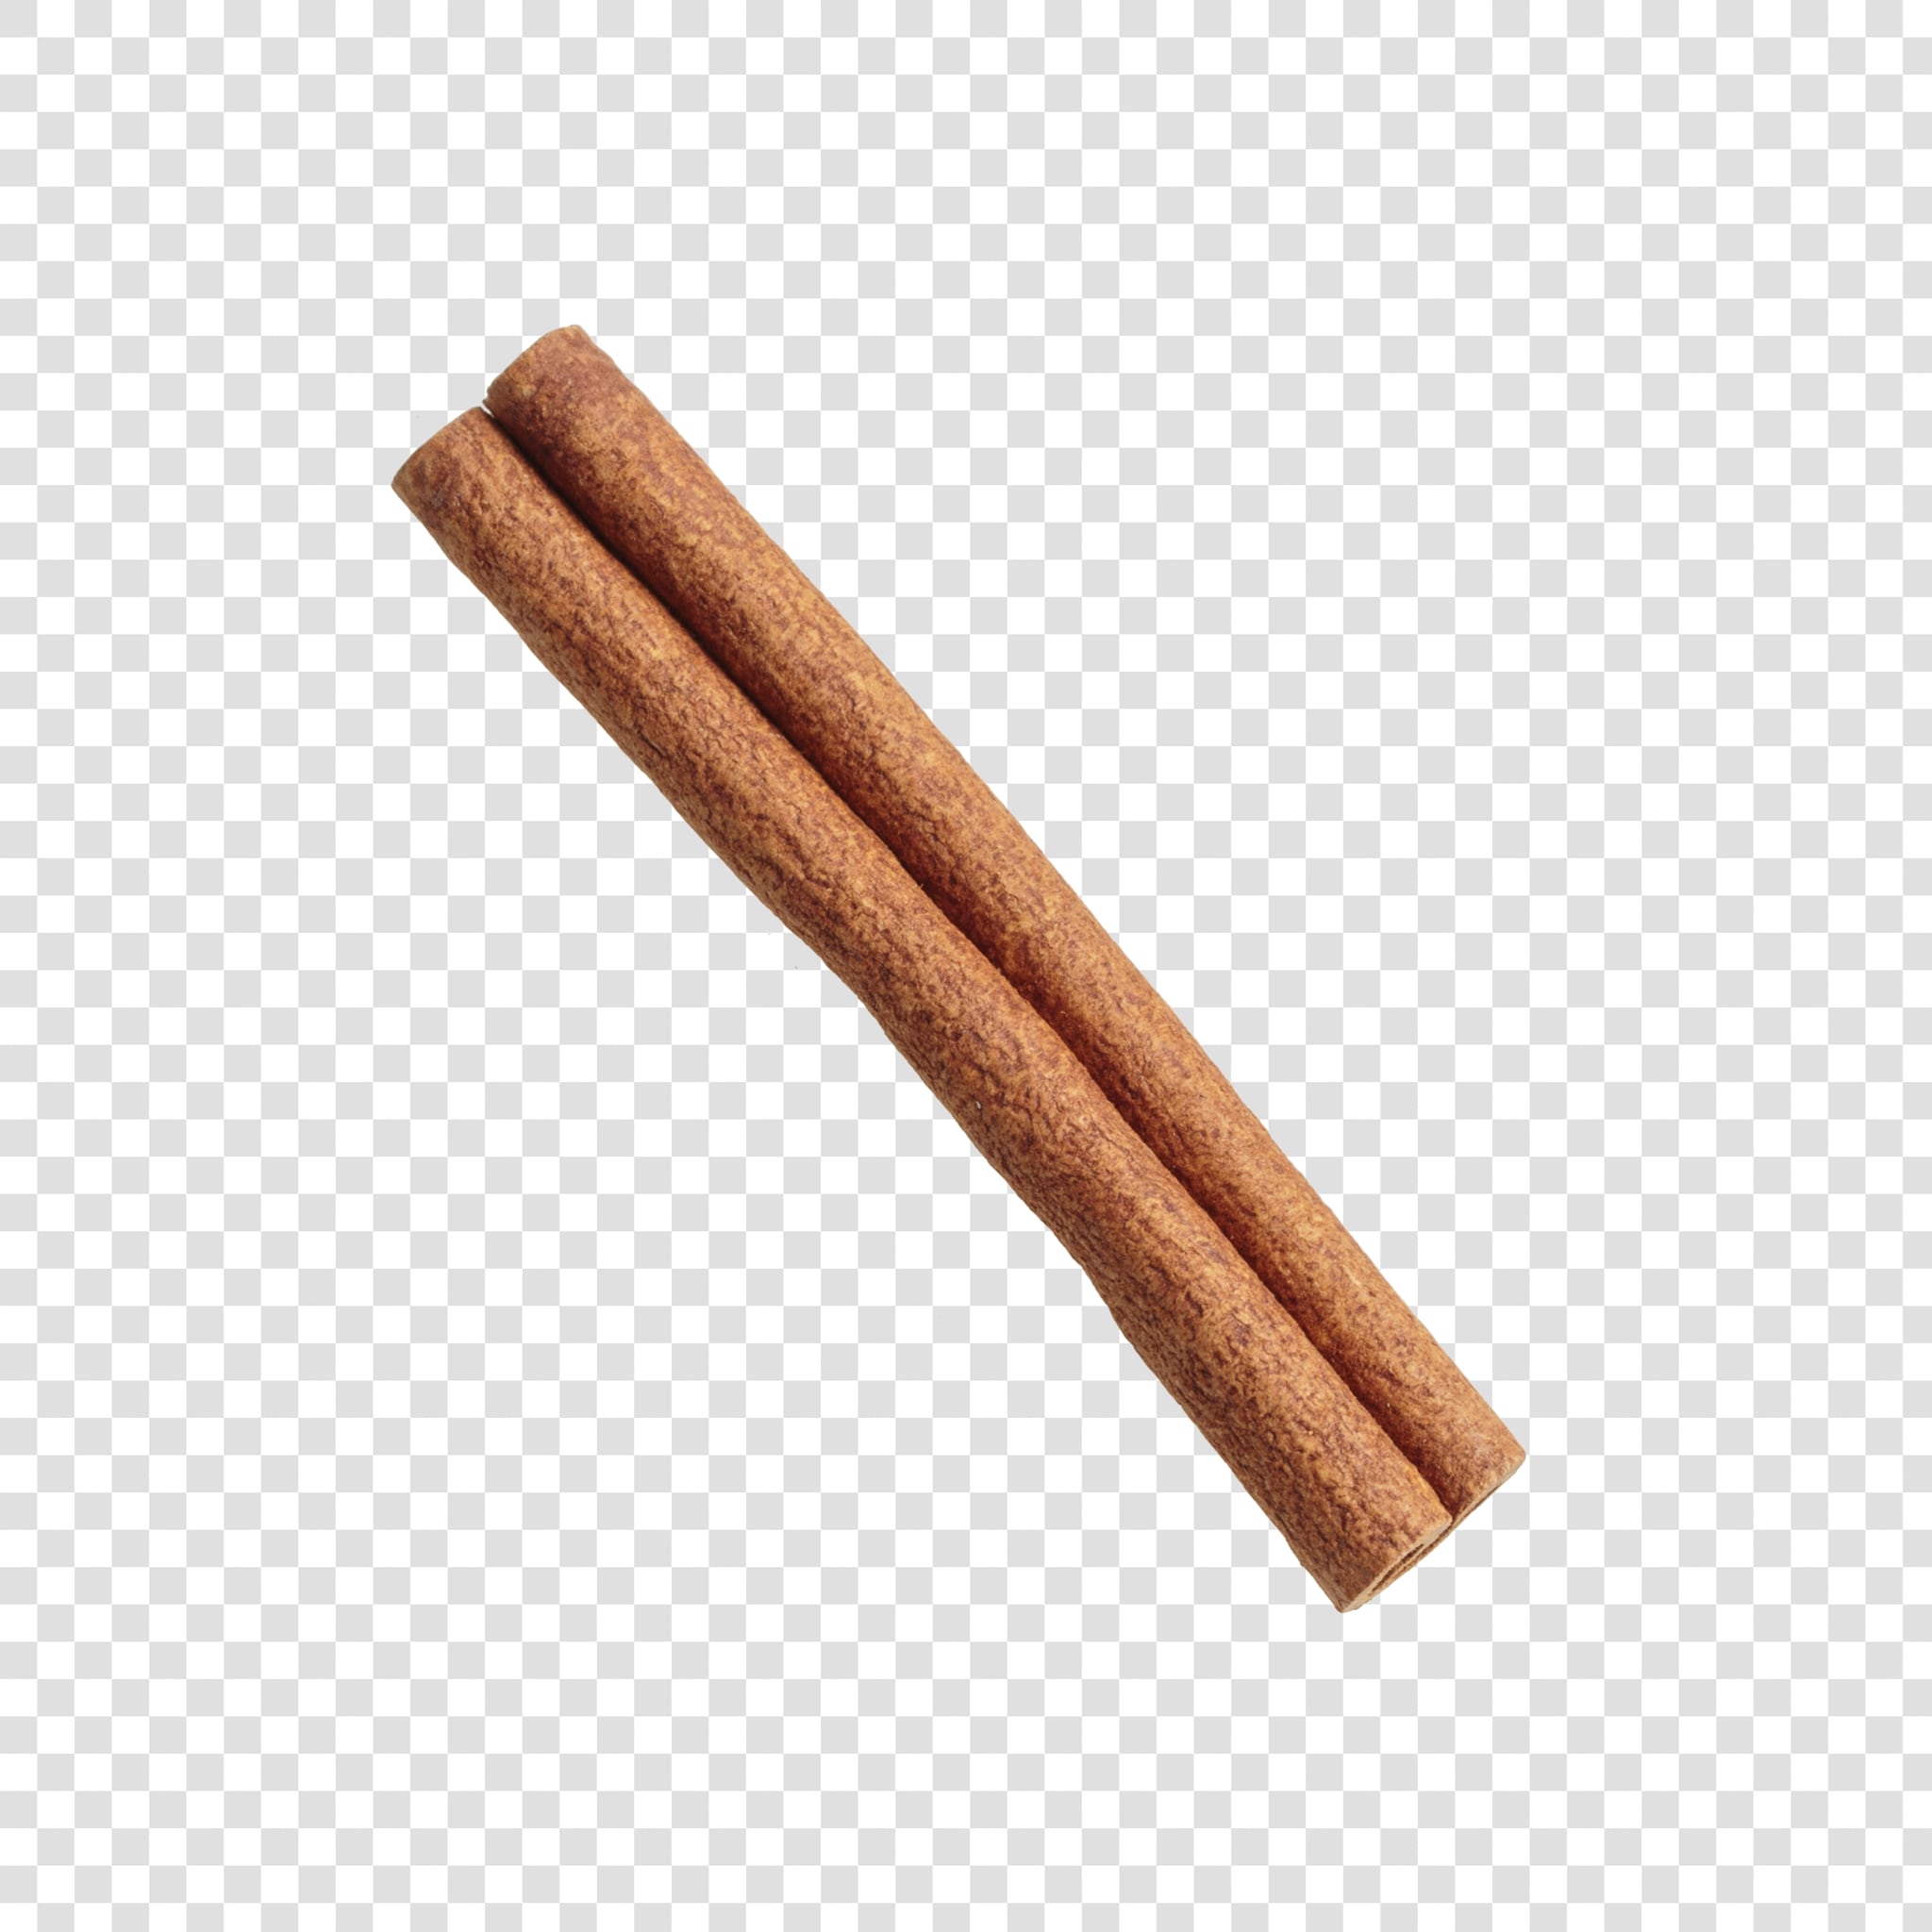 Cinnamon PSD isolated image